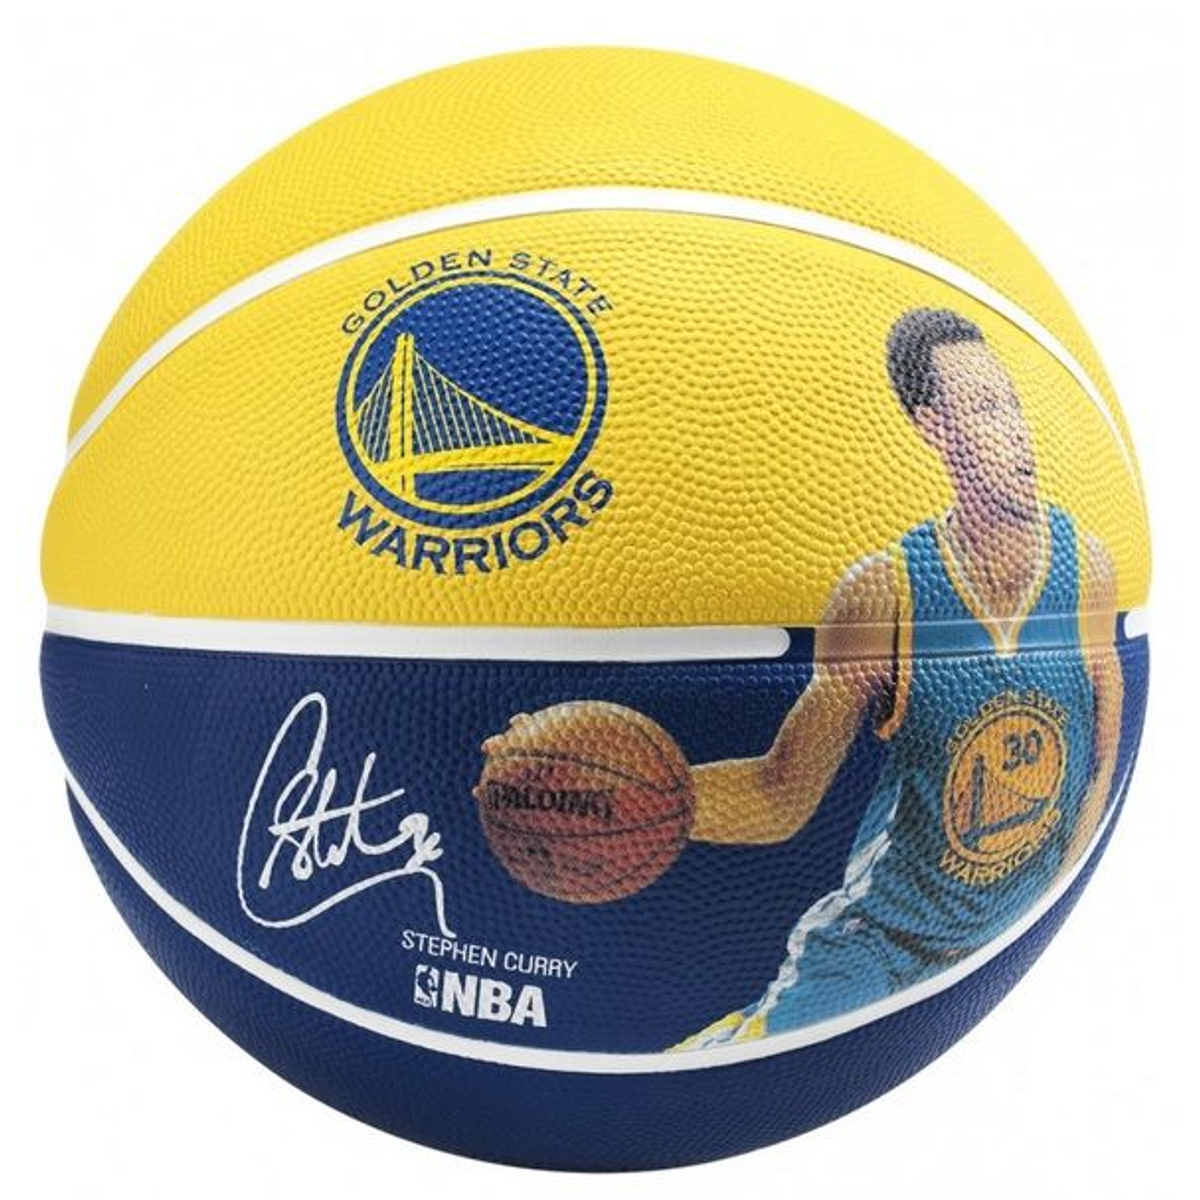 Spalding NBA Stephen Curry Basketbal